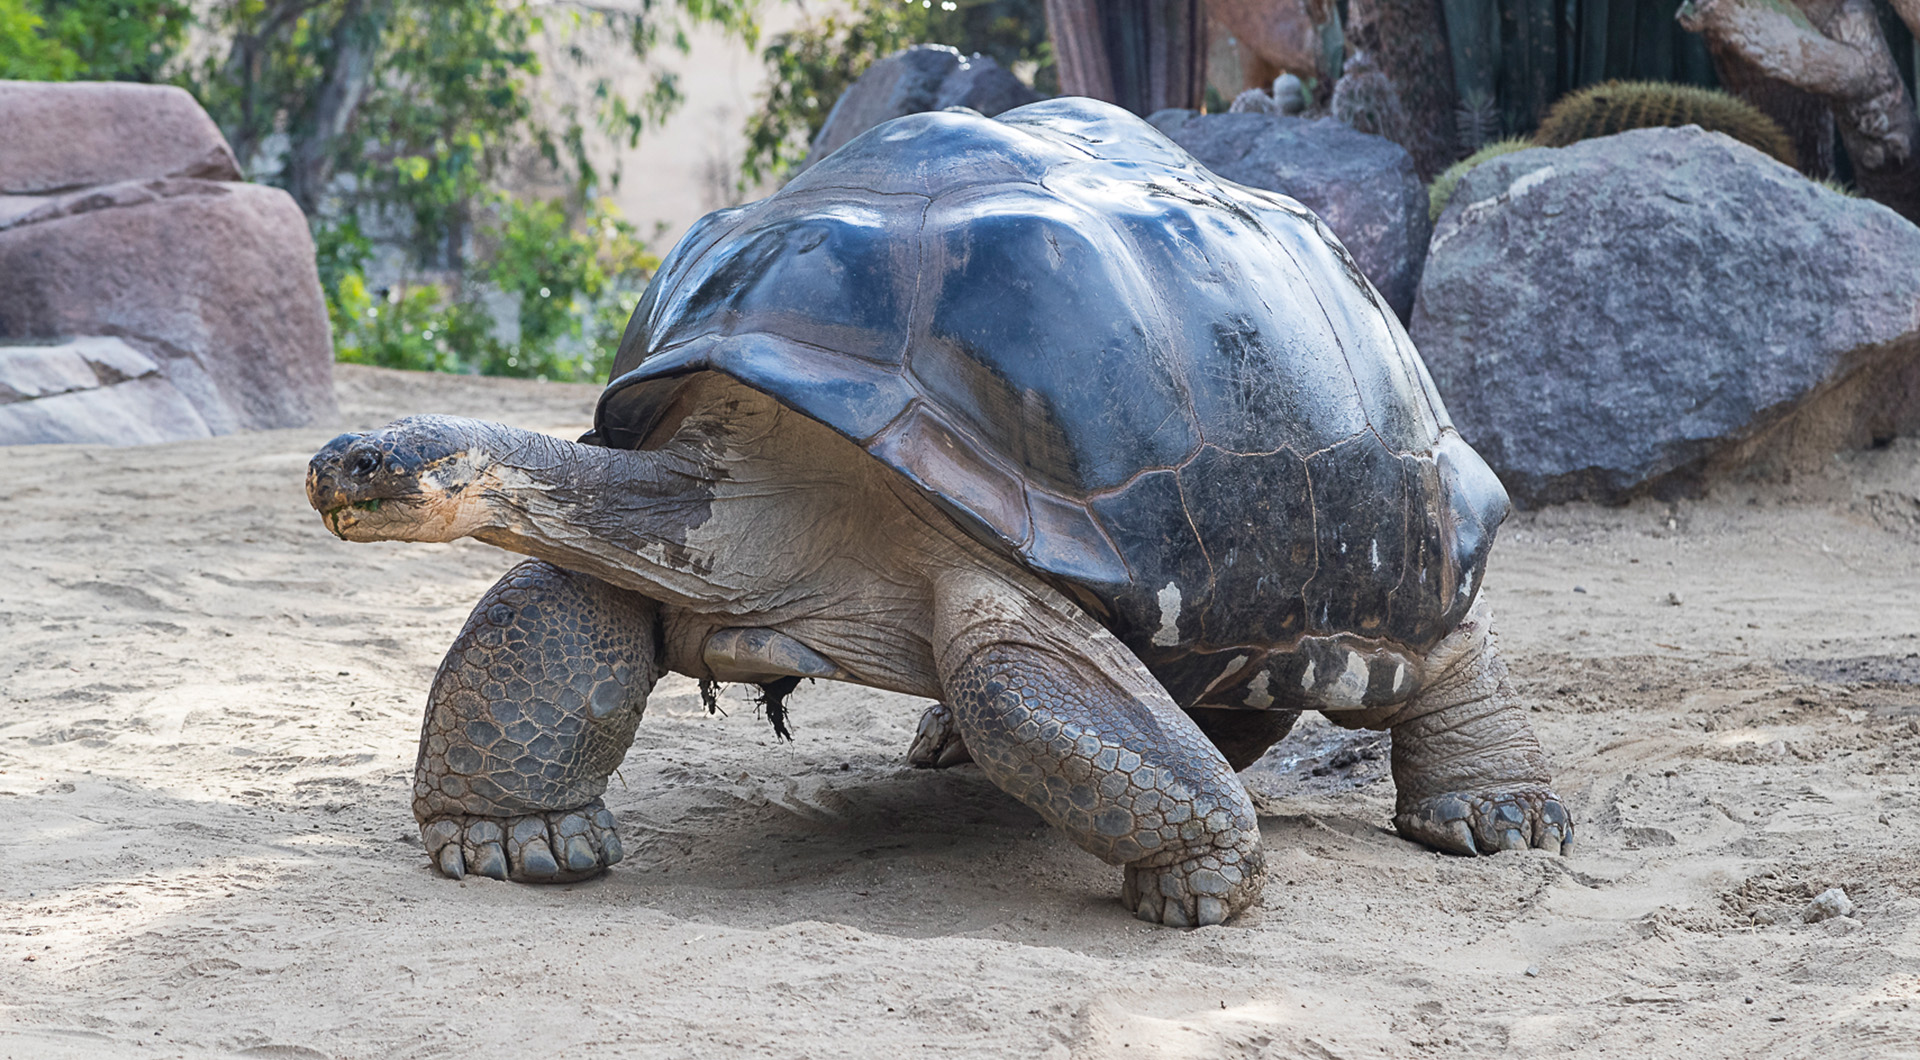 A Galapagos Giant Tortoise walking